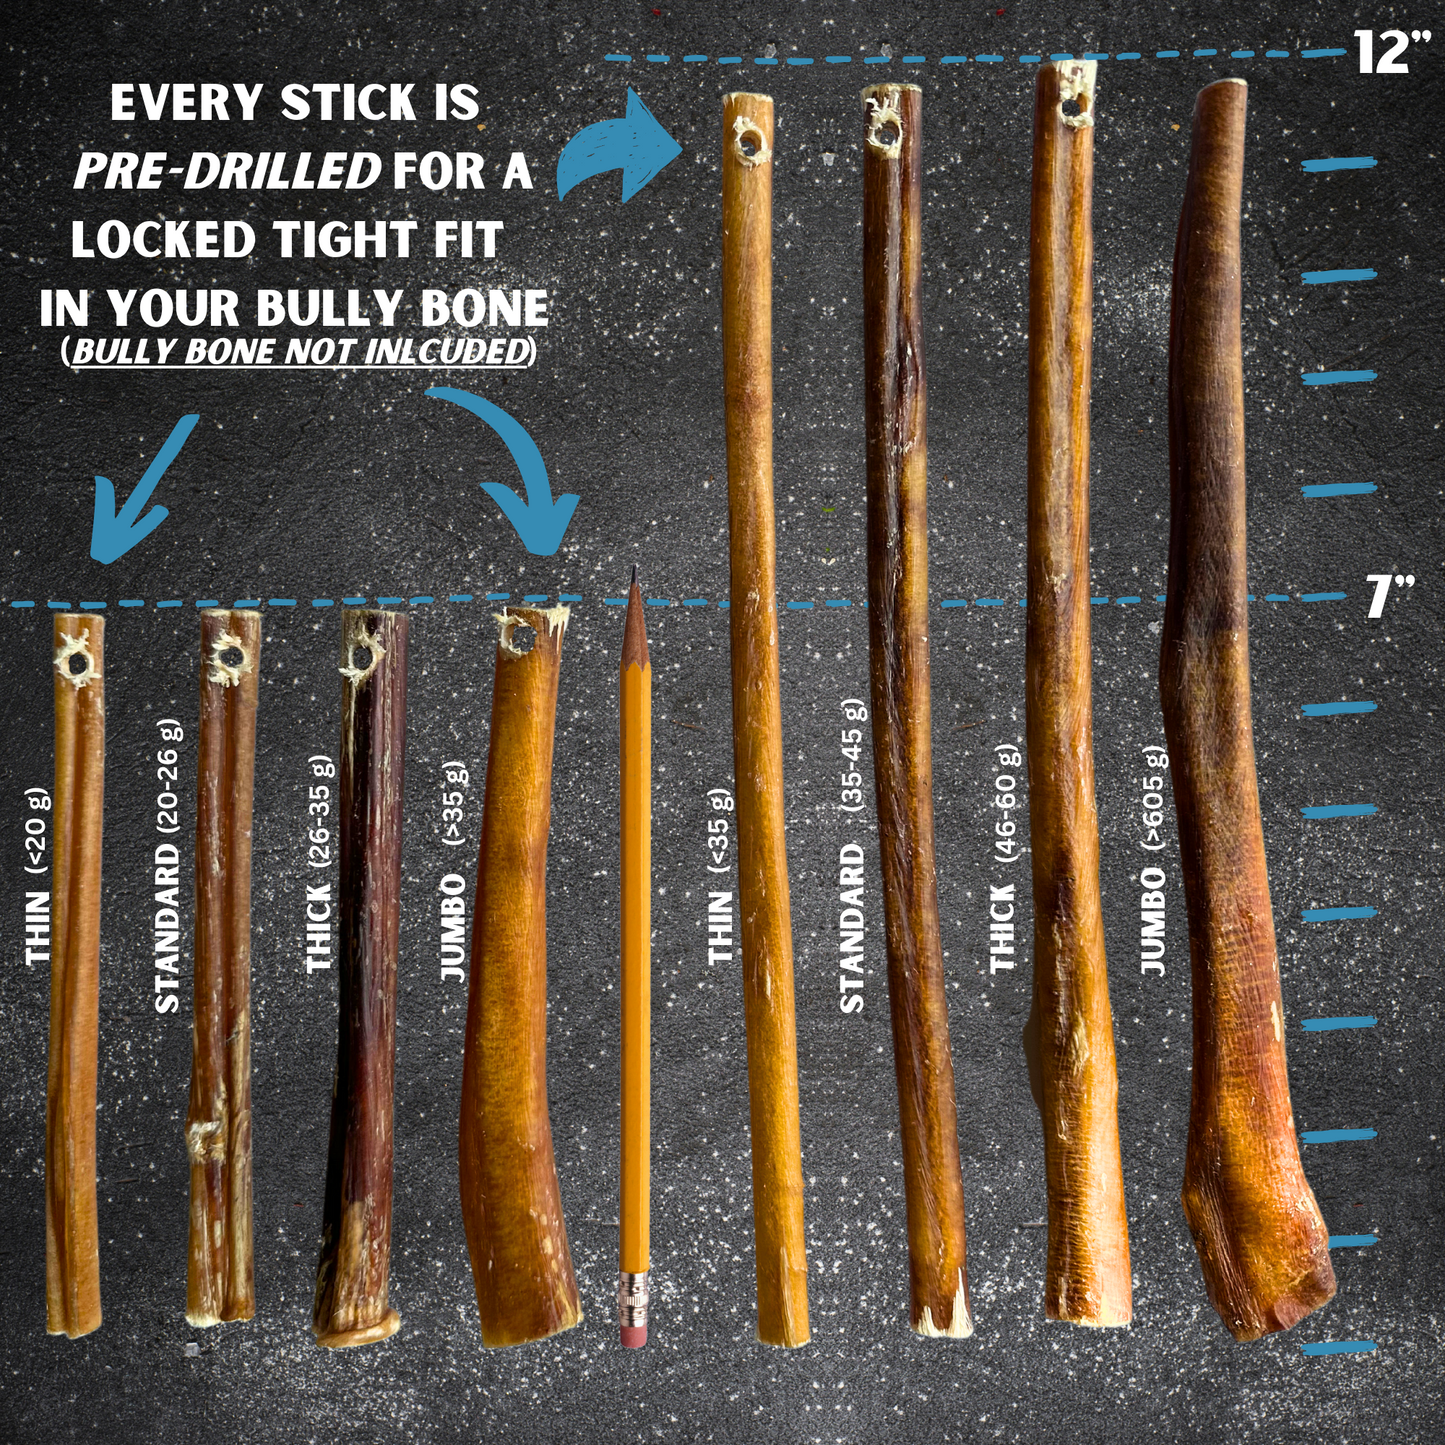 7" Thin Bully Sticks - Refill